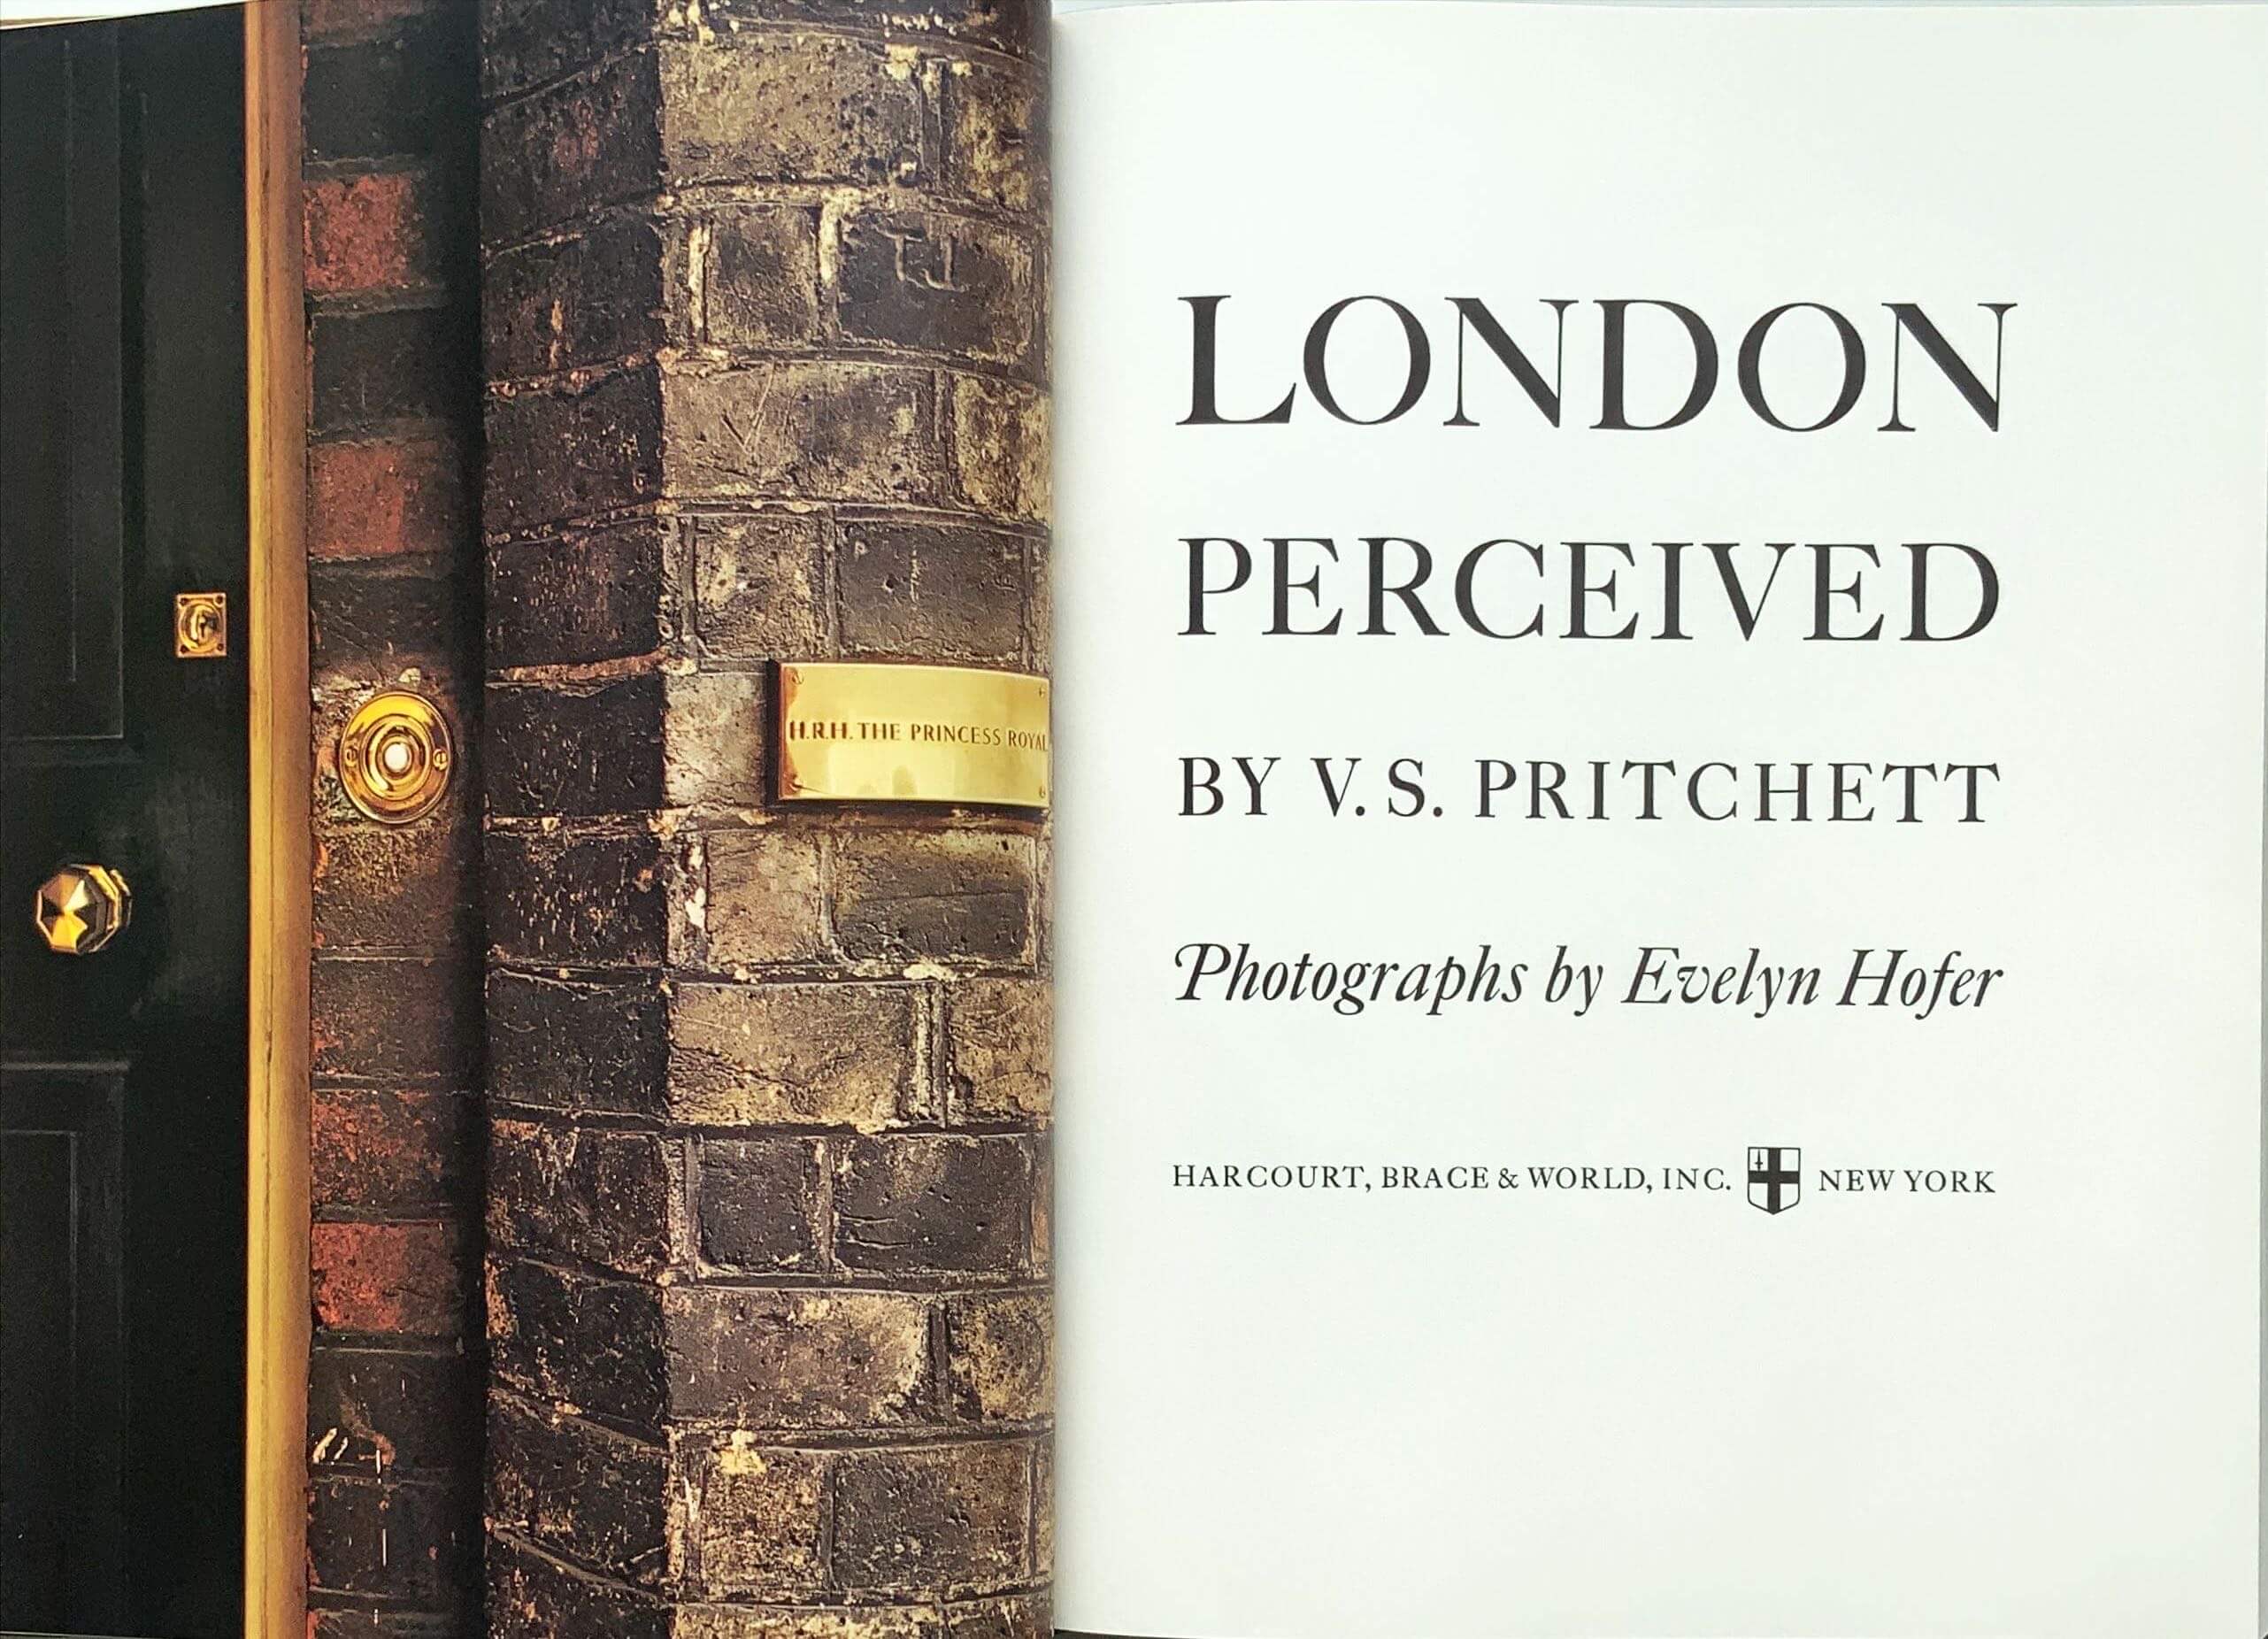 Conzett & Huber: London perceived. By V.S. Pritchett. 1962